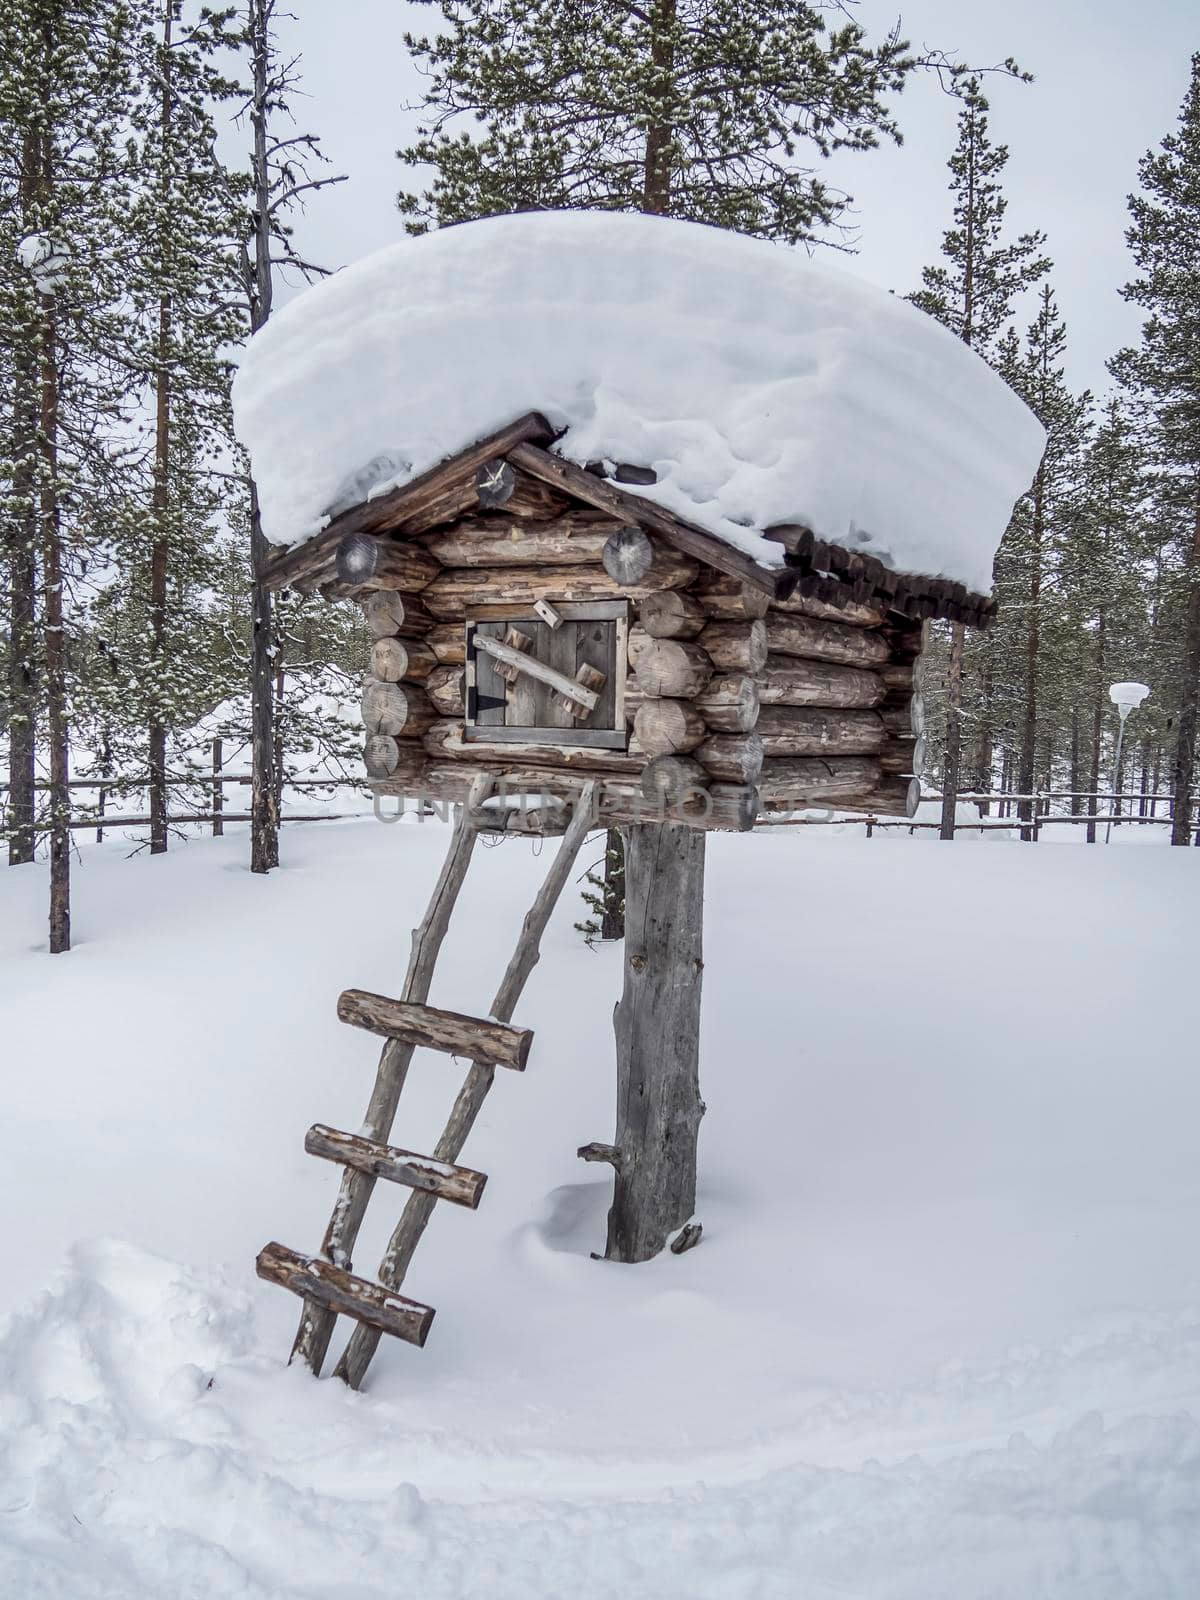 wooden hut in winter snowy forest in Finland, Lapland.